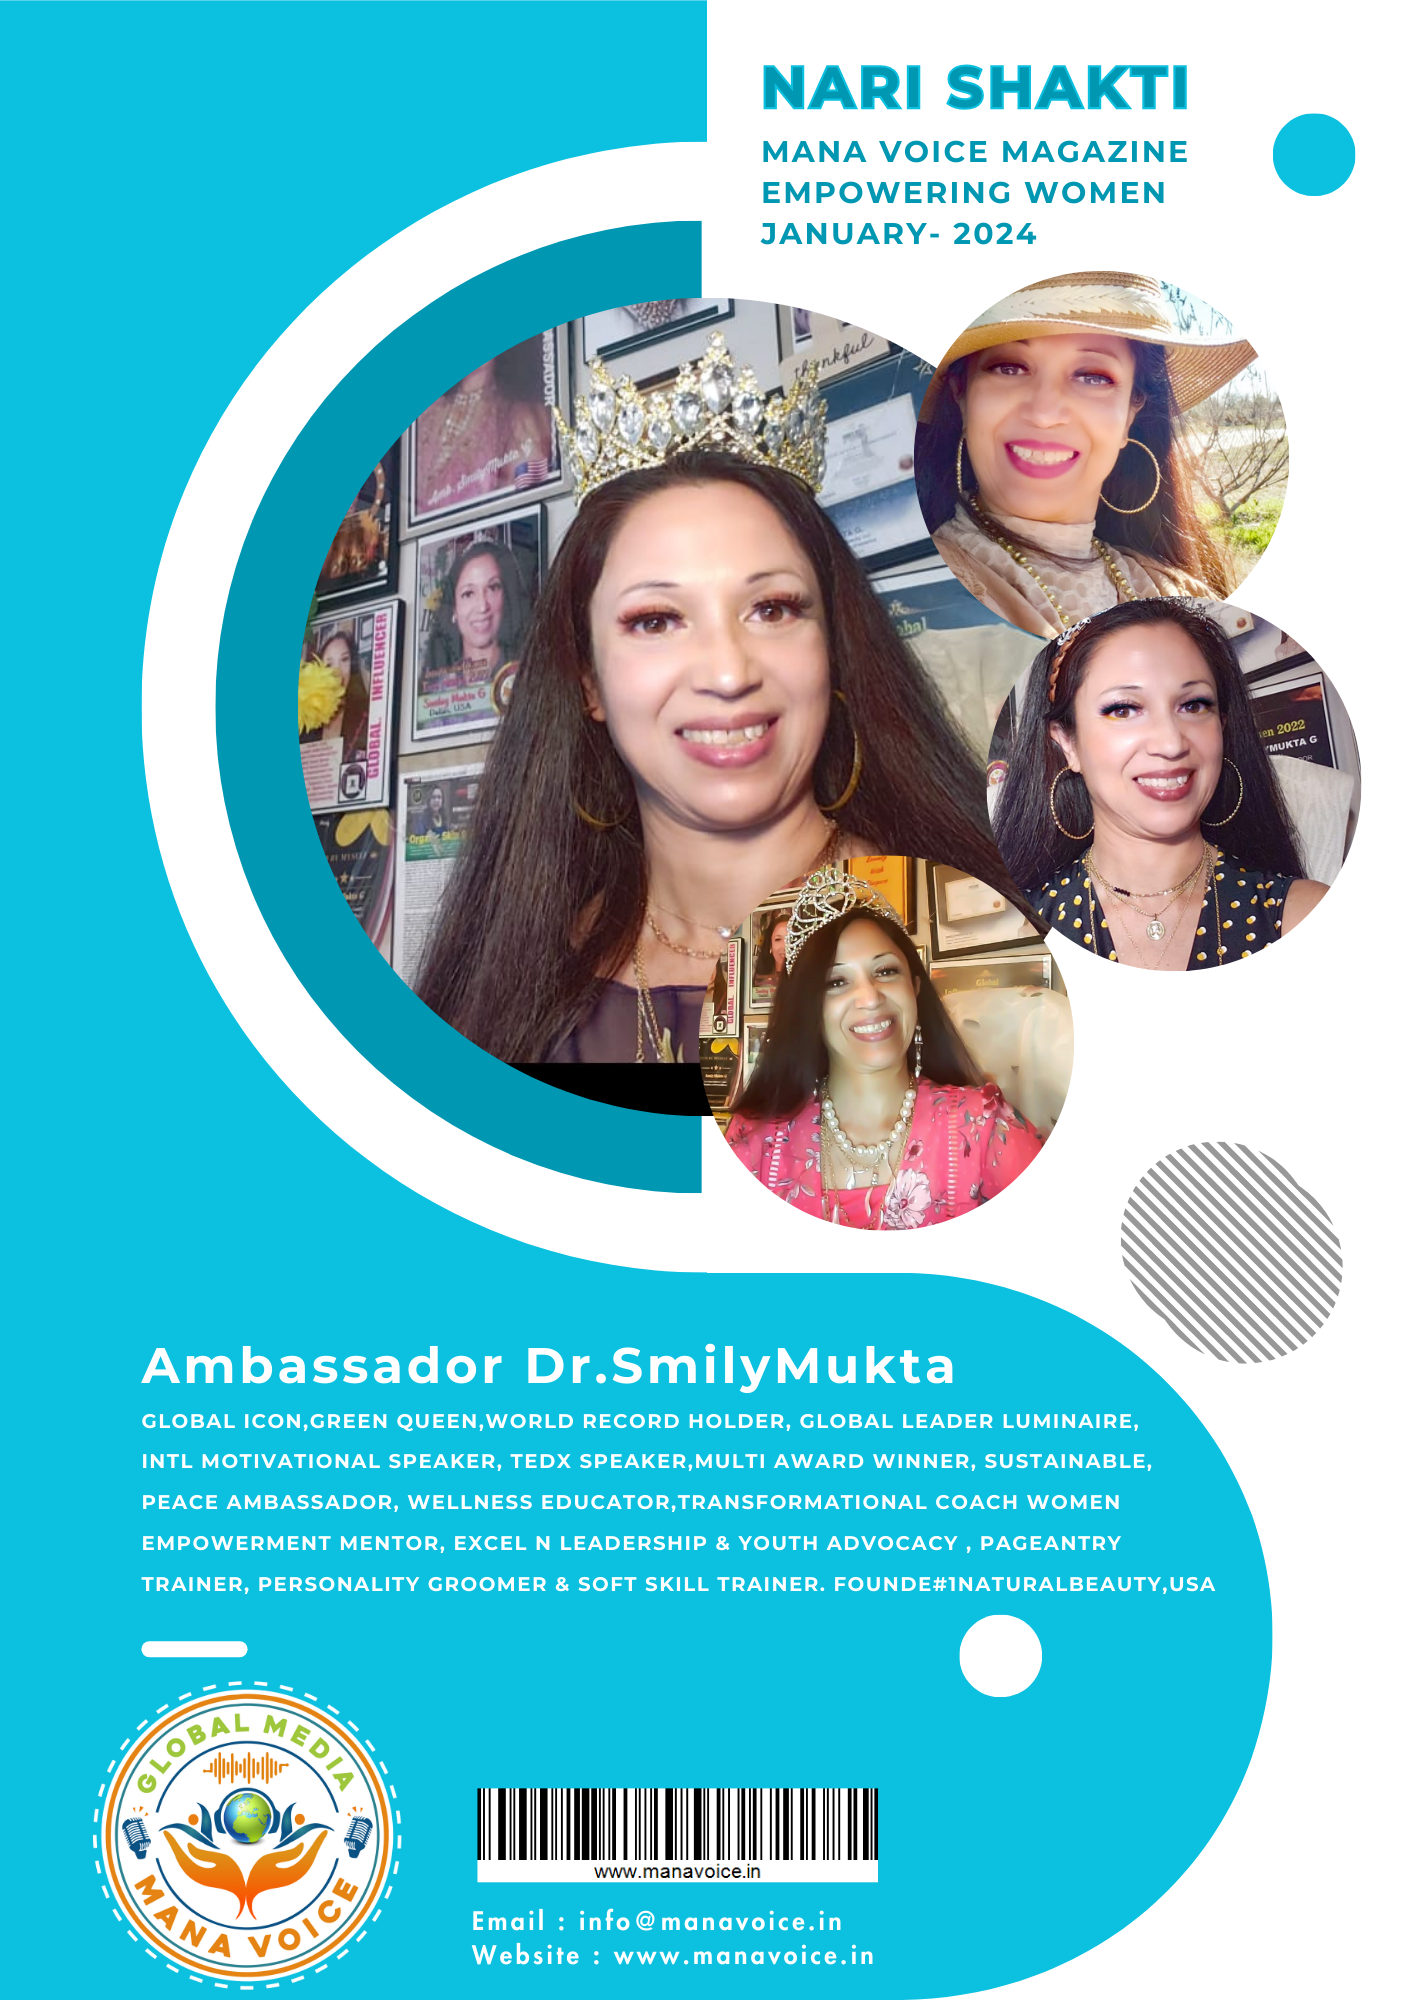 Amb.SmilyMukta from USA : The Green Queen Inspiring Change | Nari Shakti - Empowering Women | Mana Voice